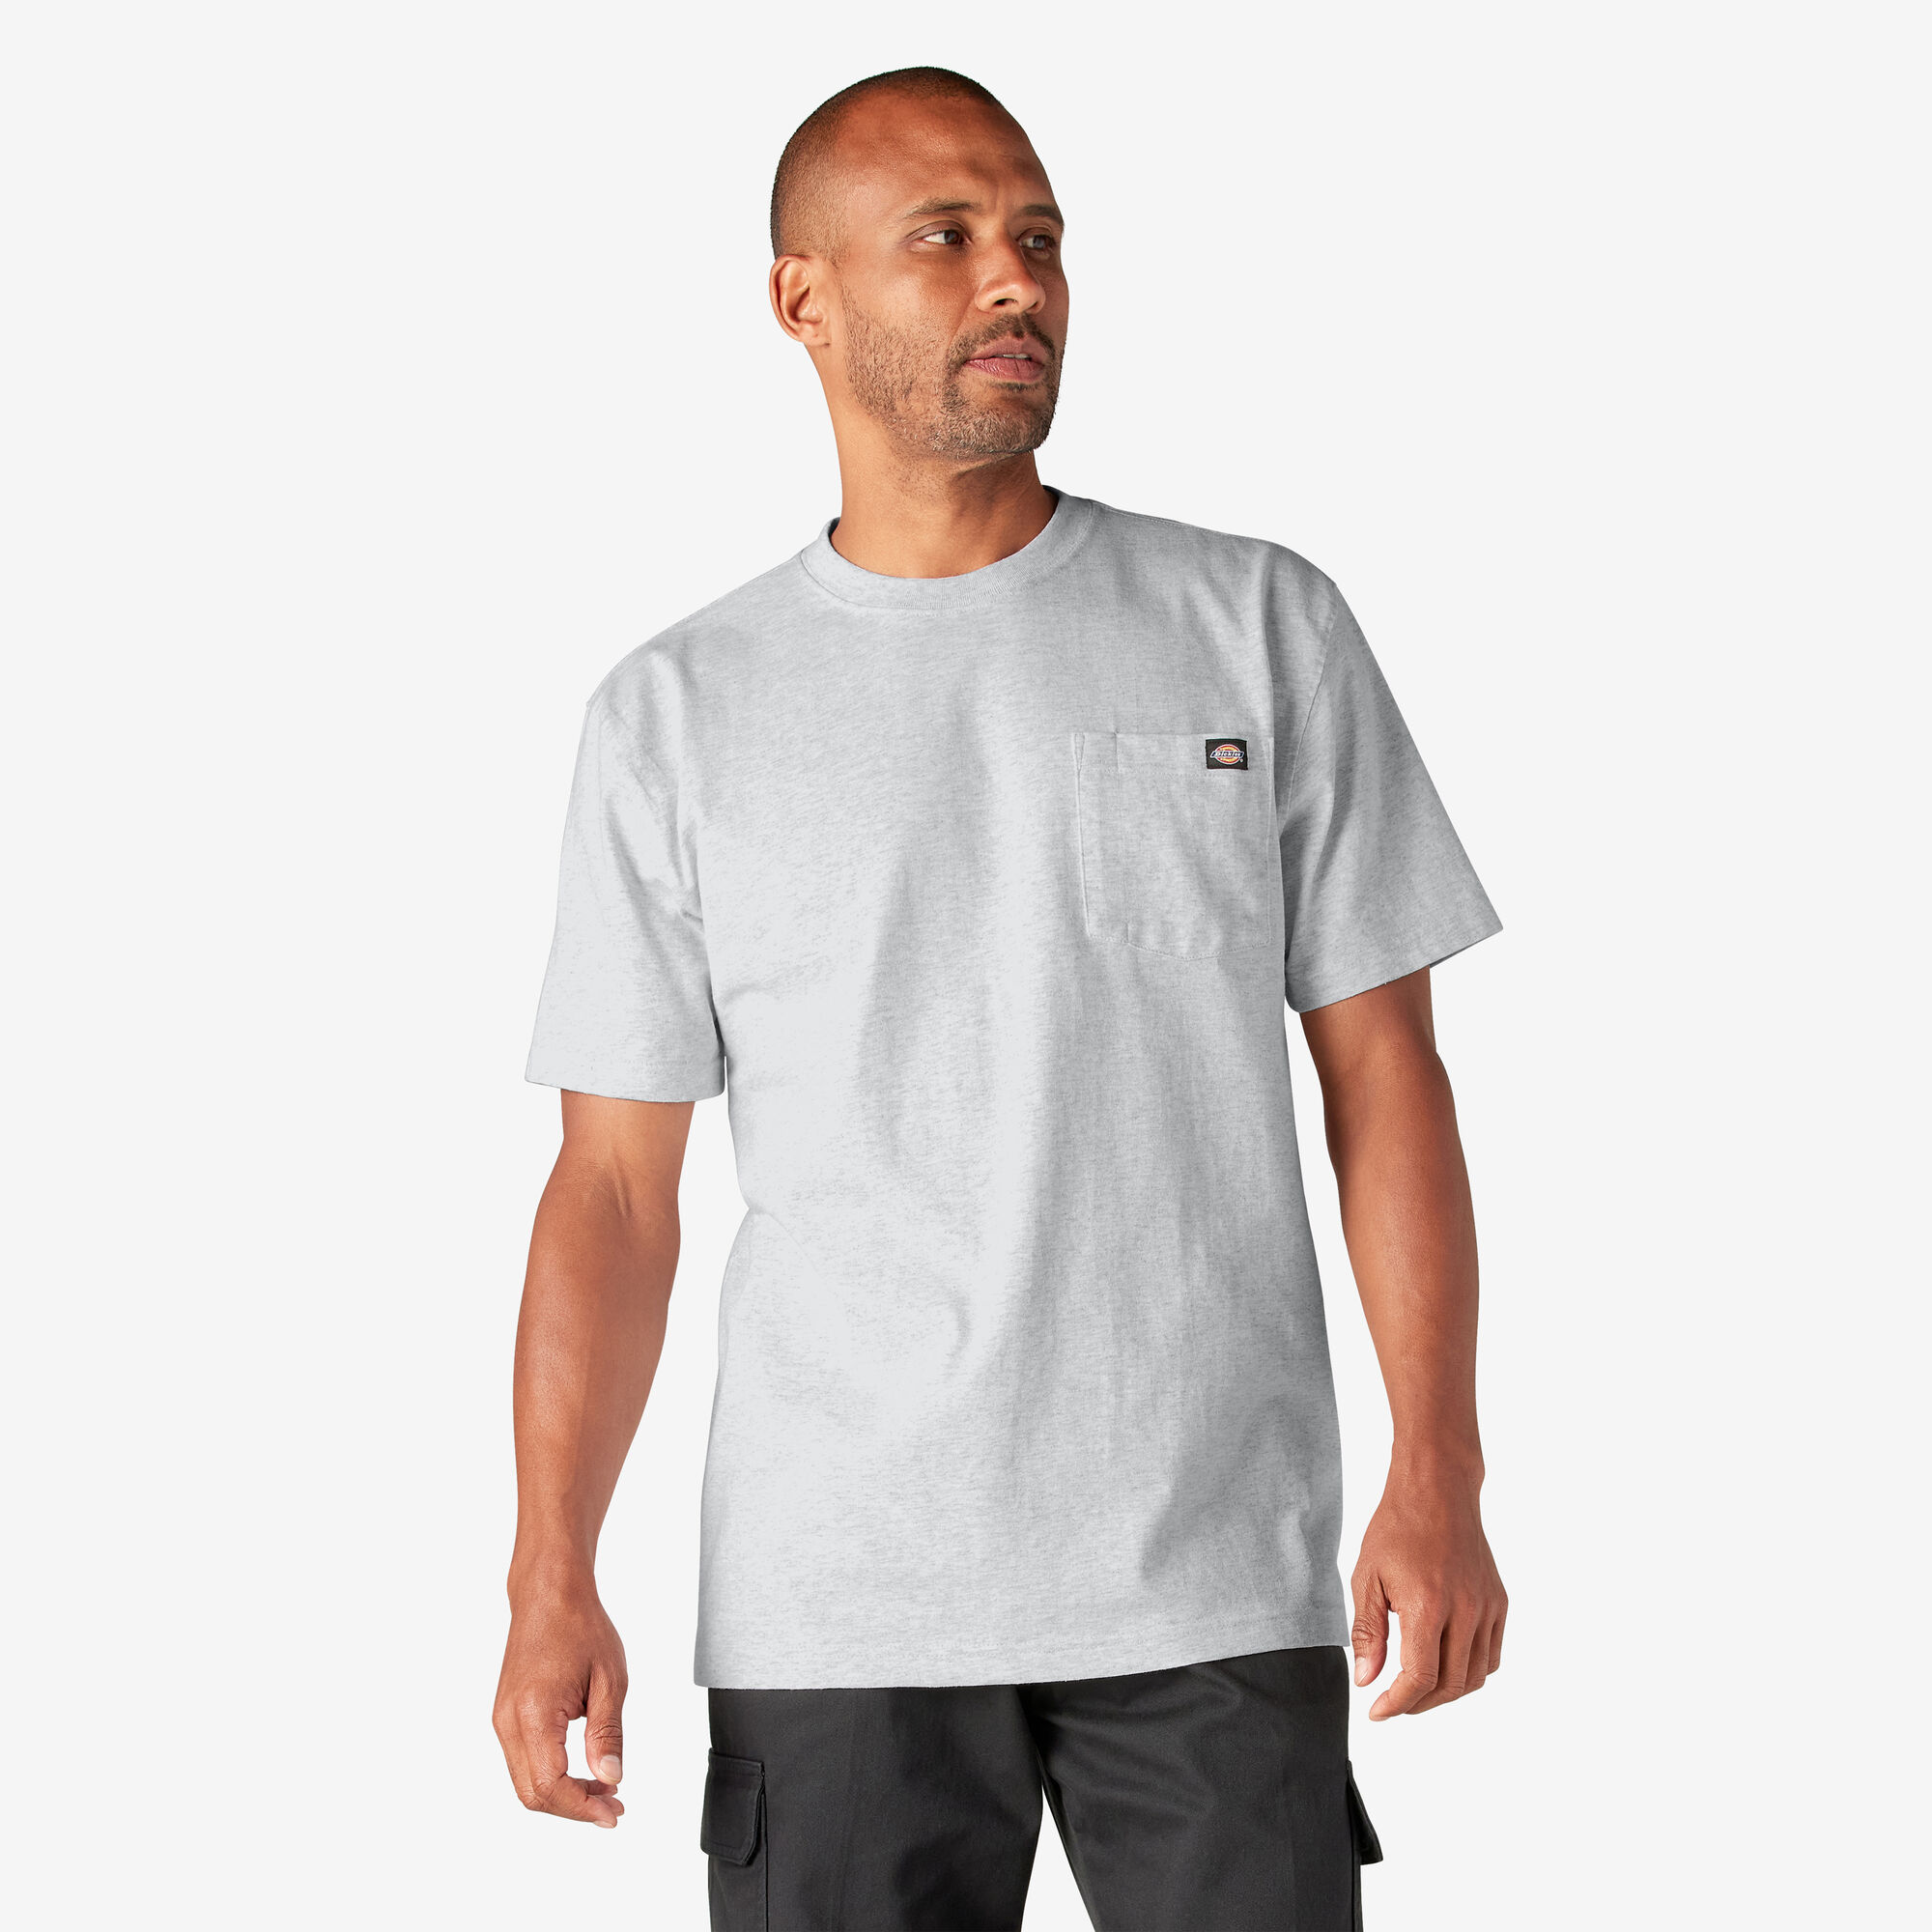 Dickies Men's Short Sleeve Heavyweight T-Shirt - Ash Gray 2XL